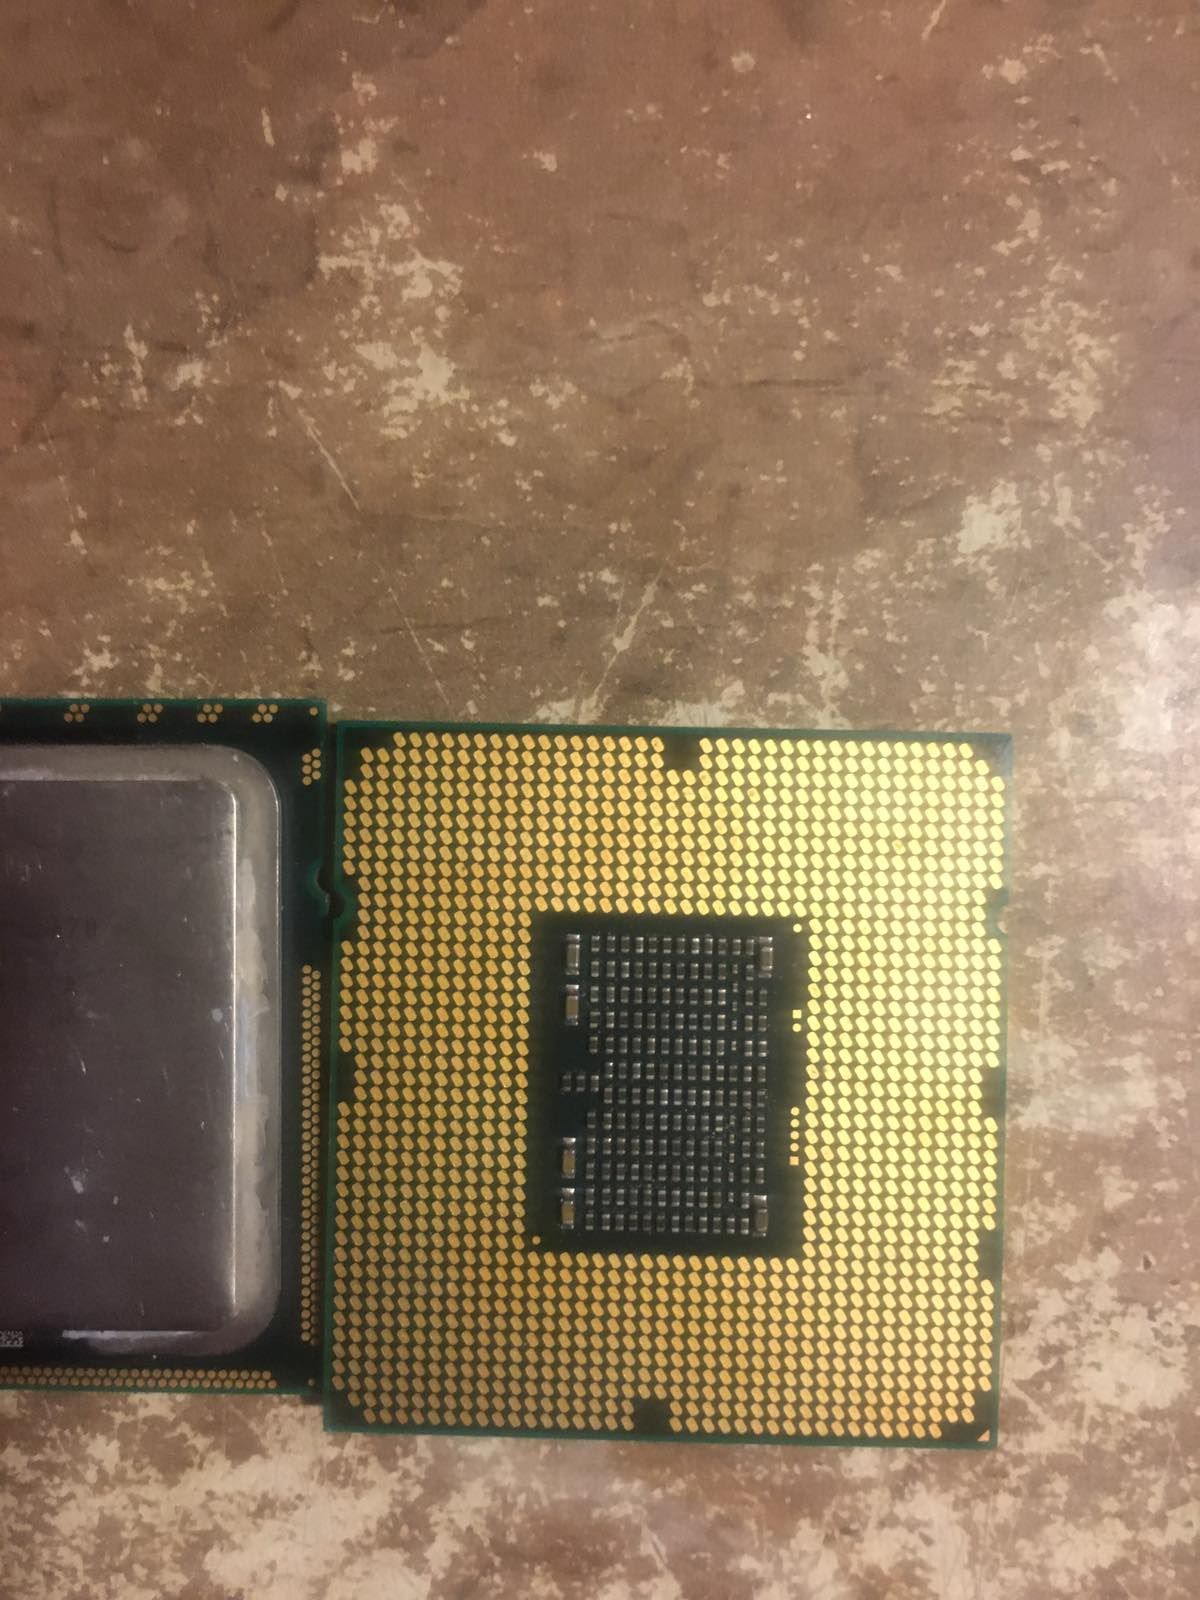 Пpoцecop Intel Xeon E5620